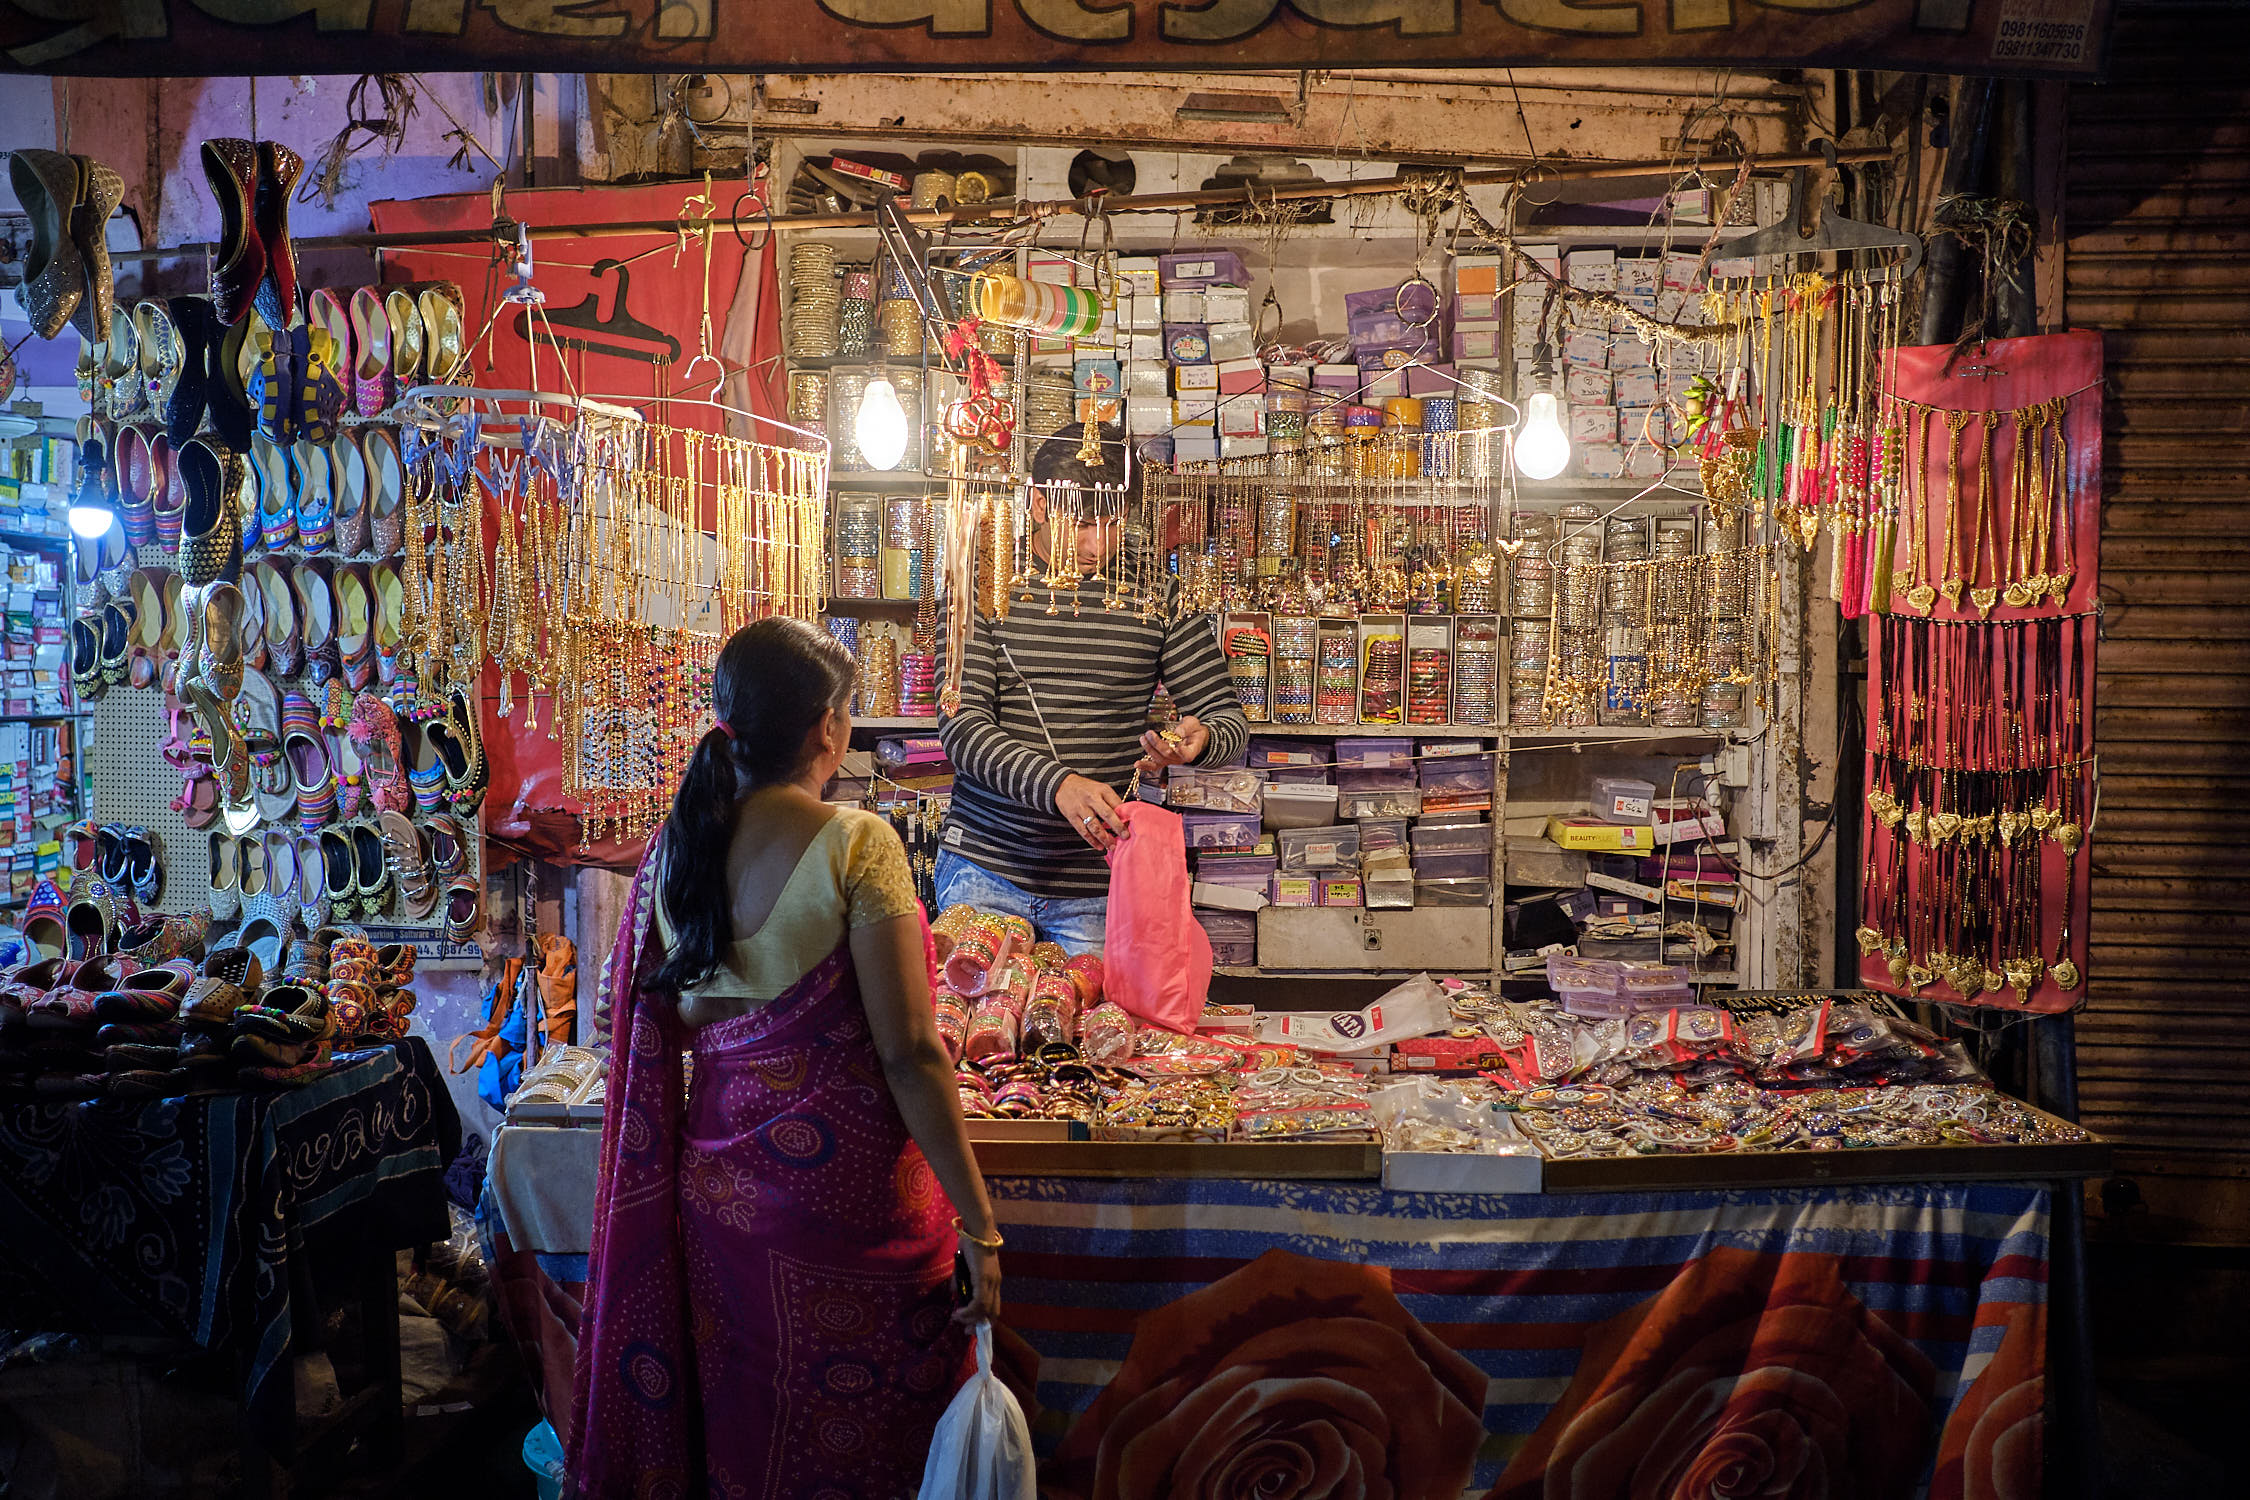 Jewellery street vendor in Jaipur